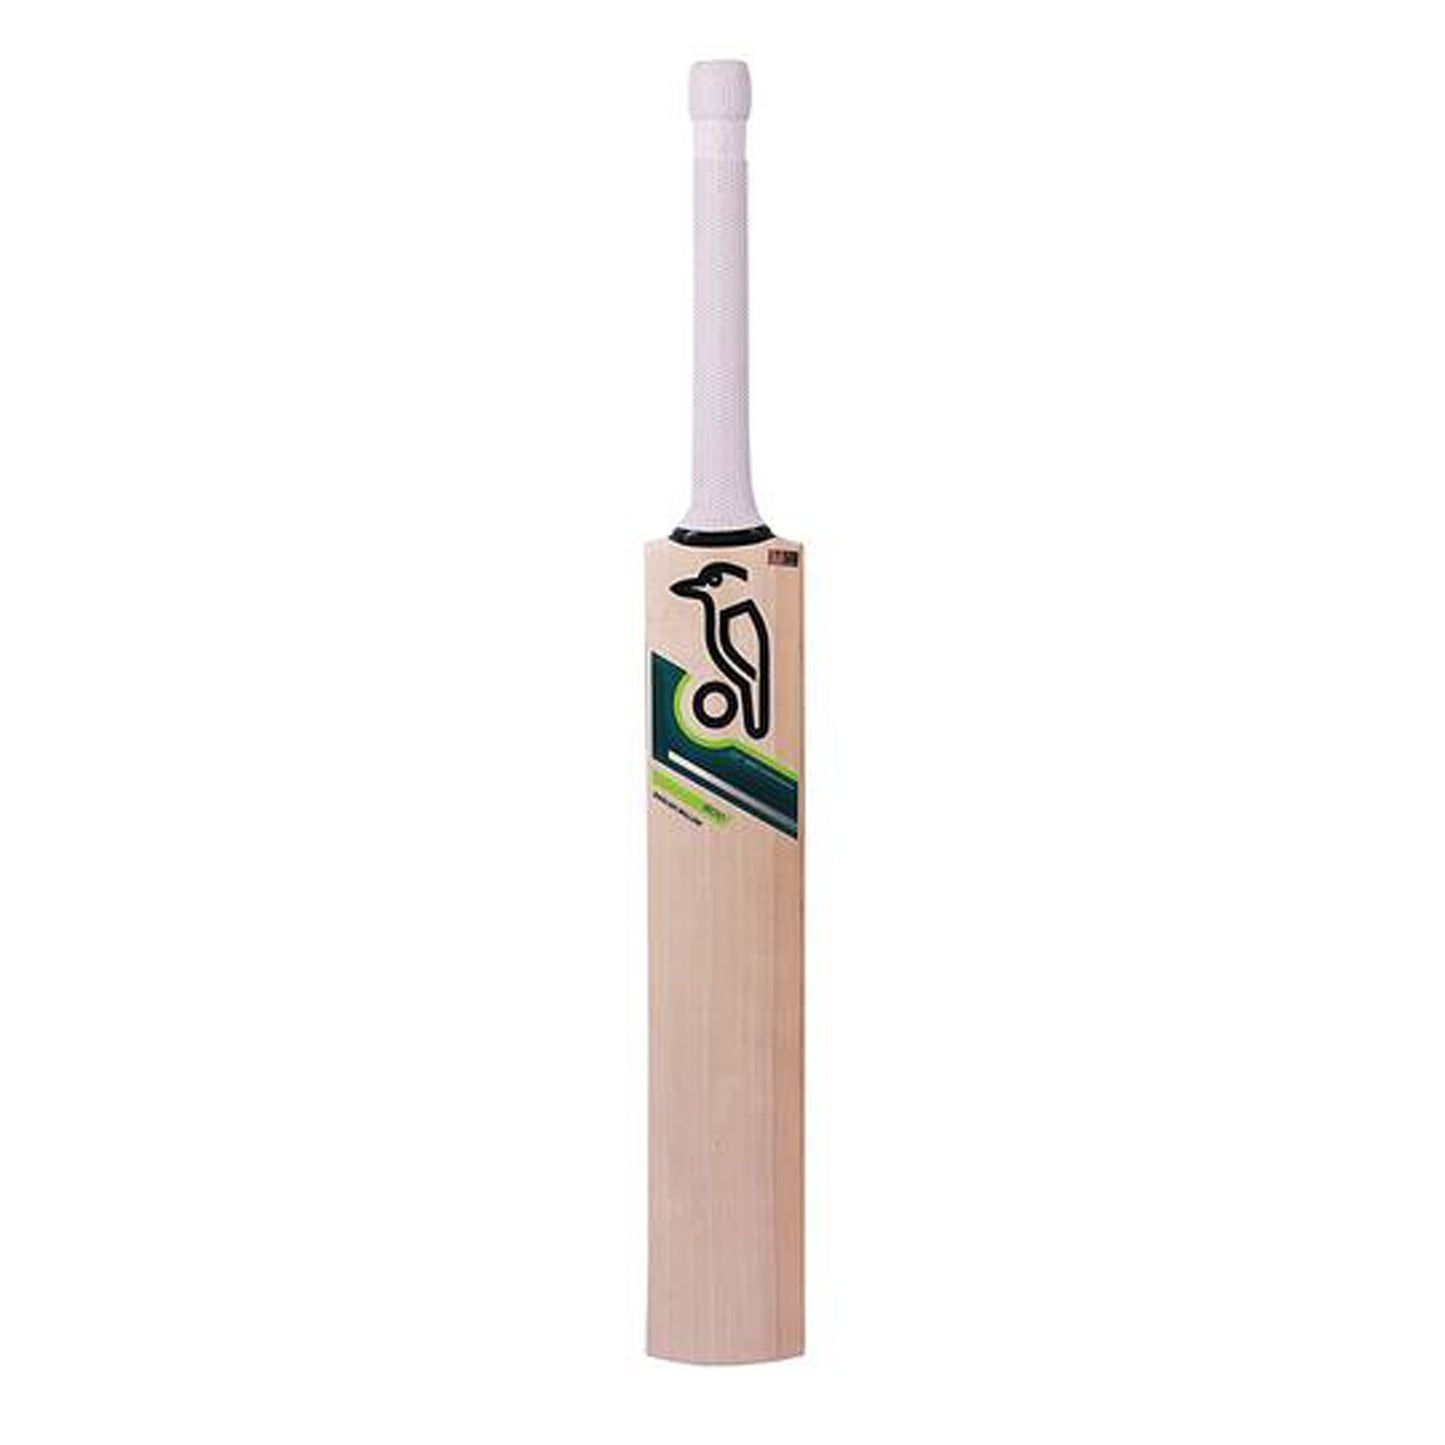 Kookaburra Kahuna 600 English Willow Cricket Bat - Best Price online Prokicksports.com